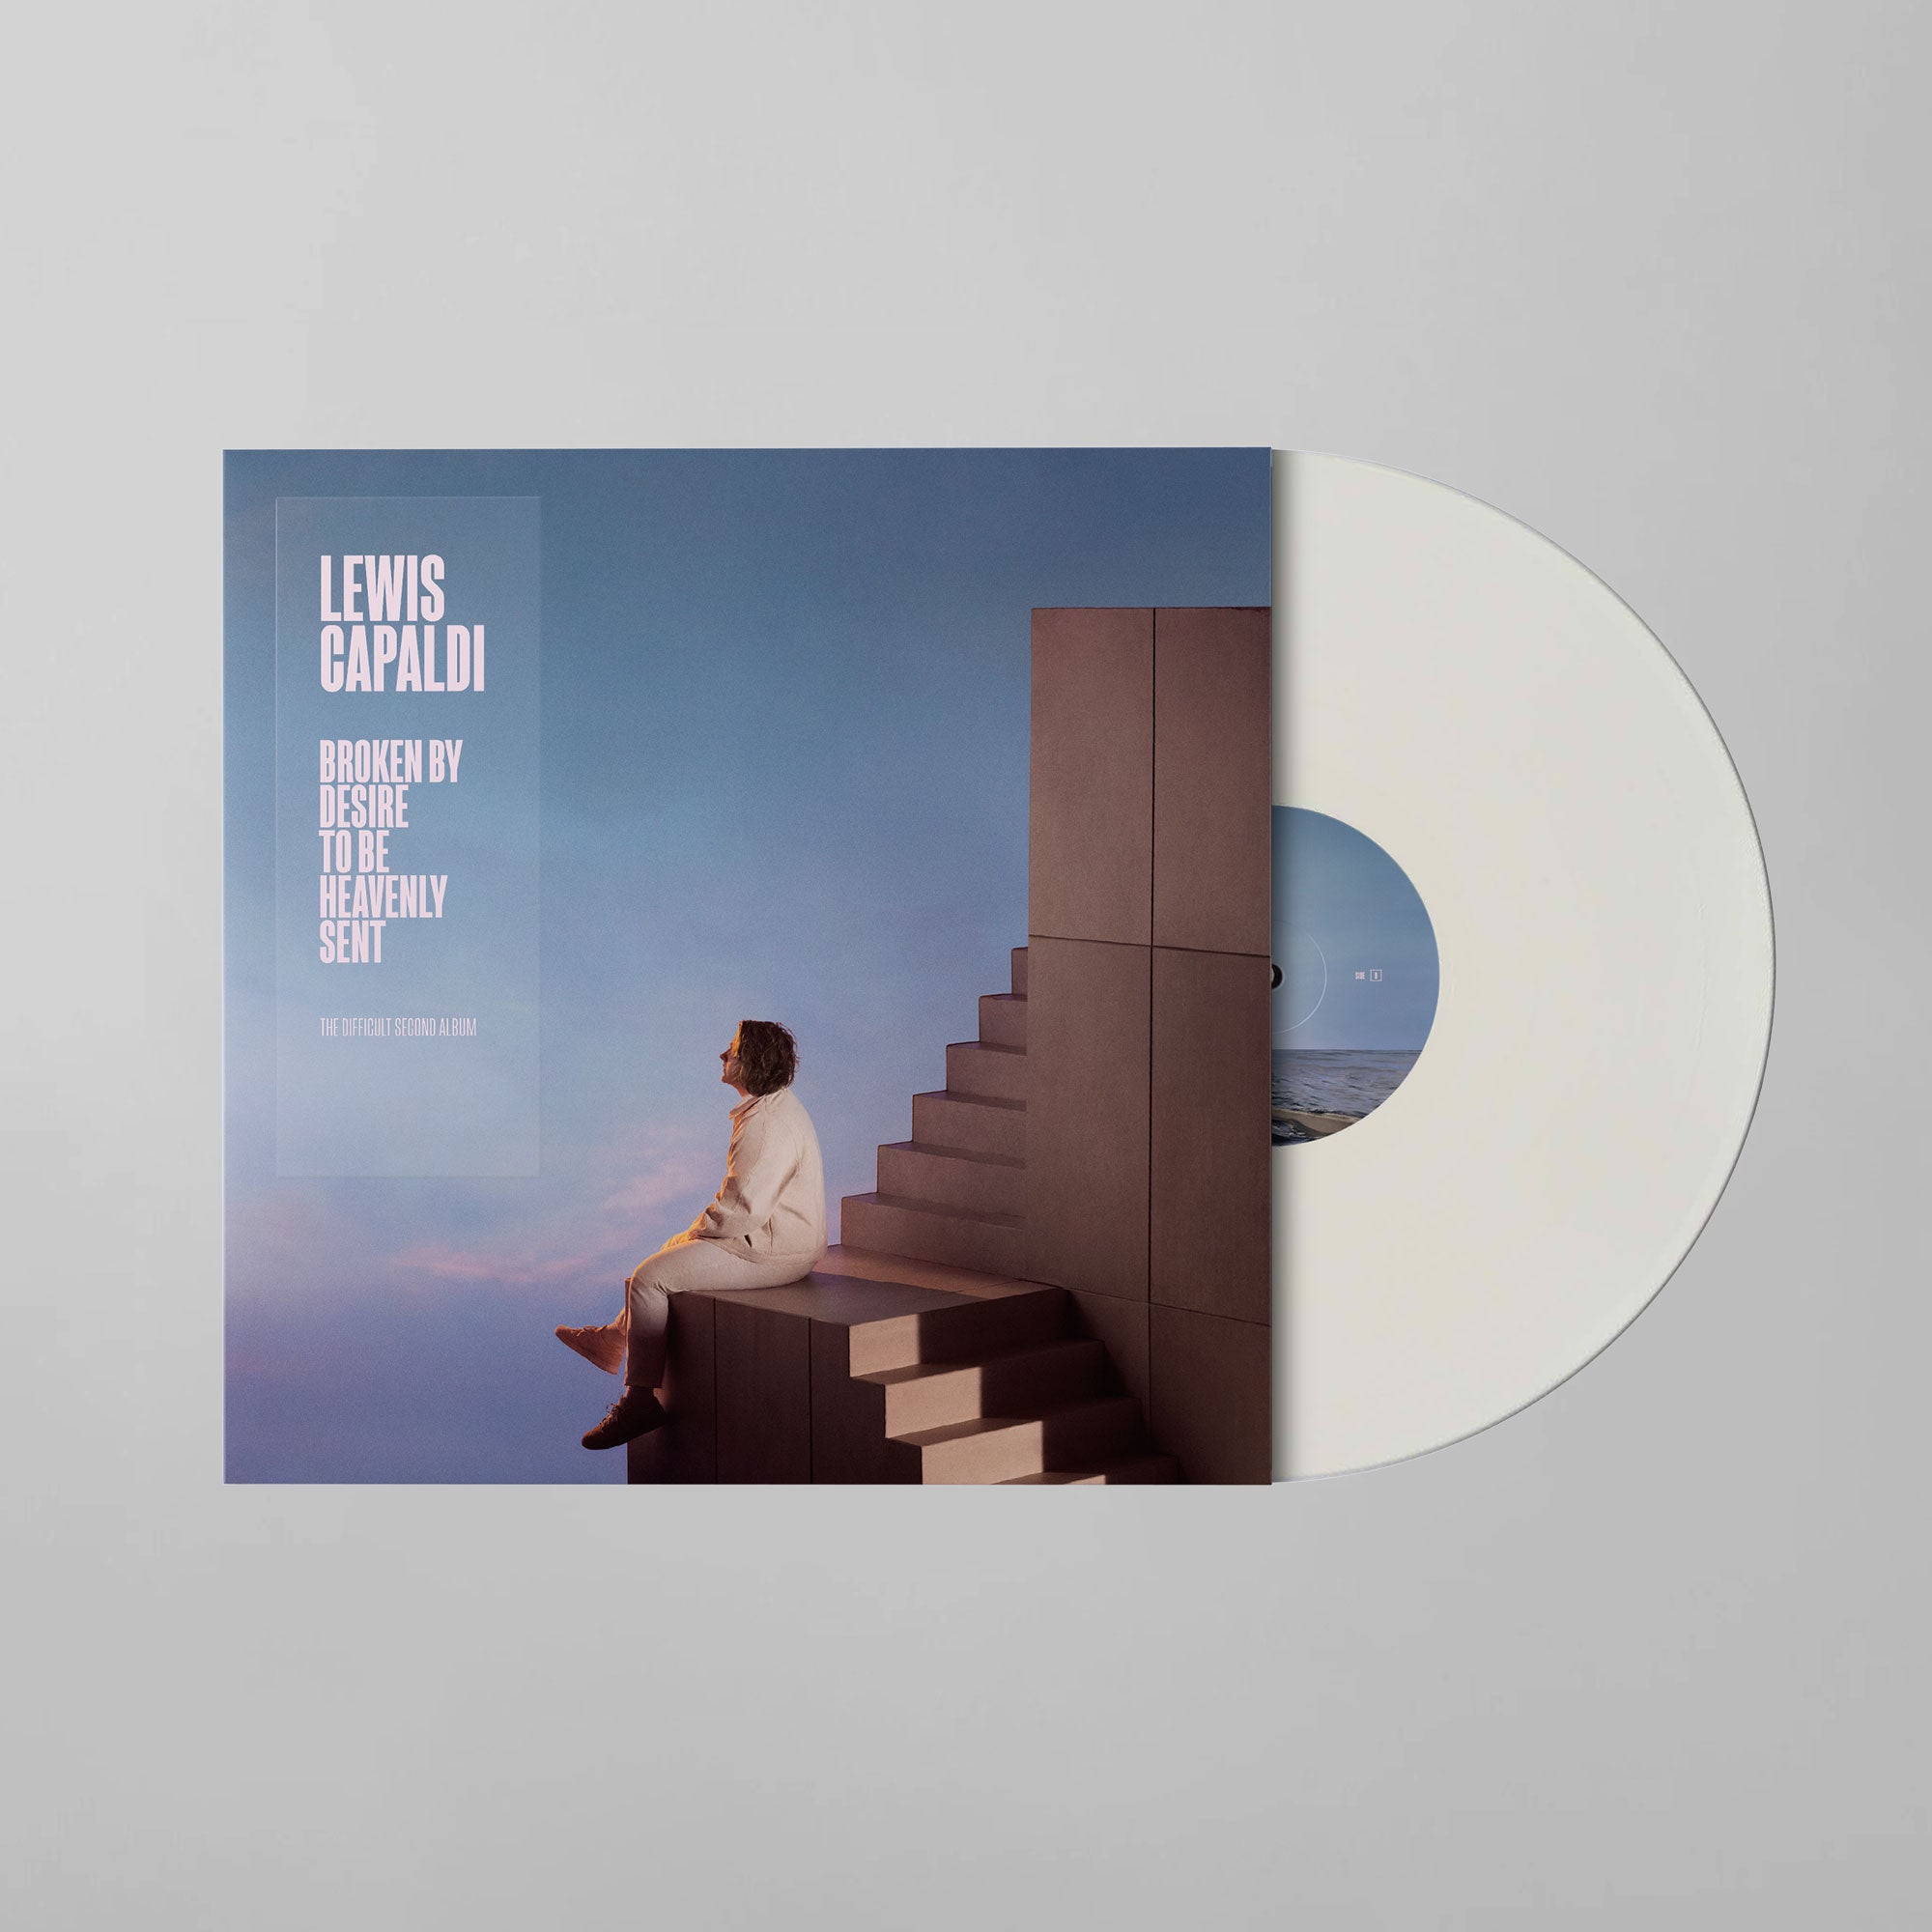 Lewis Capaldi - Limited Edition White LP Collectors Set